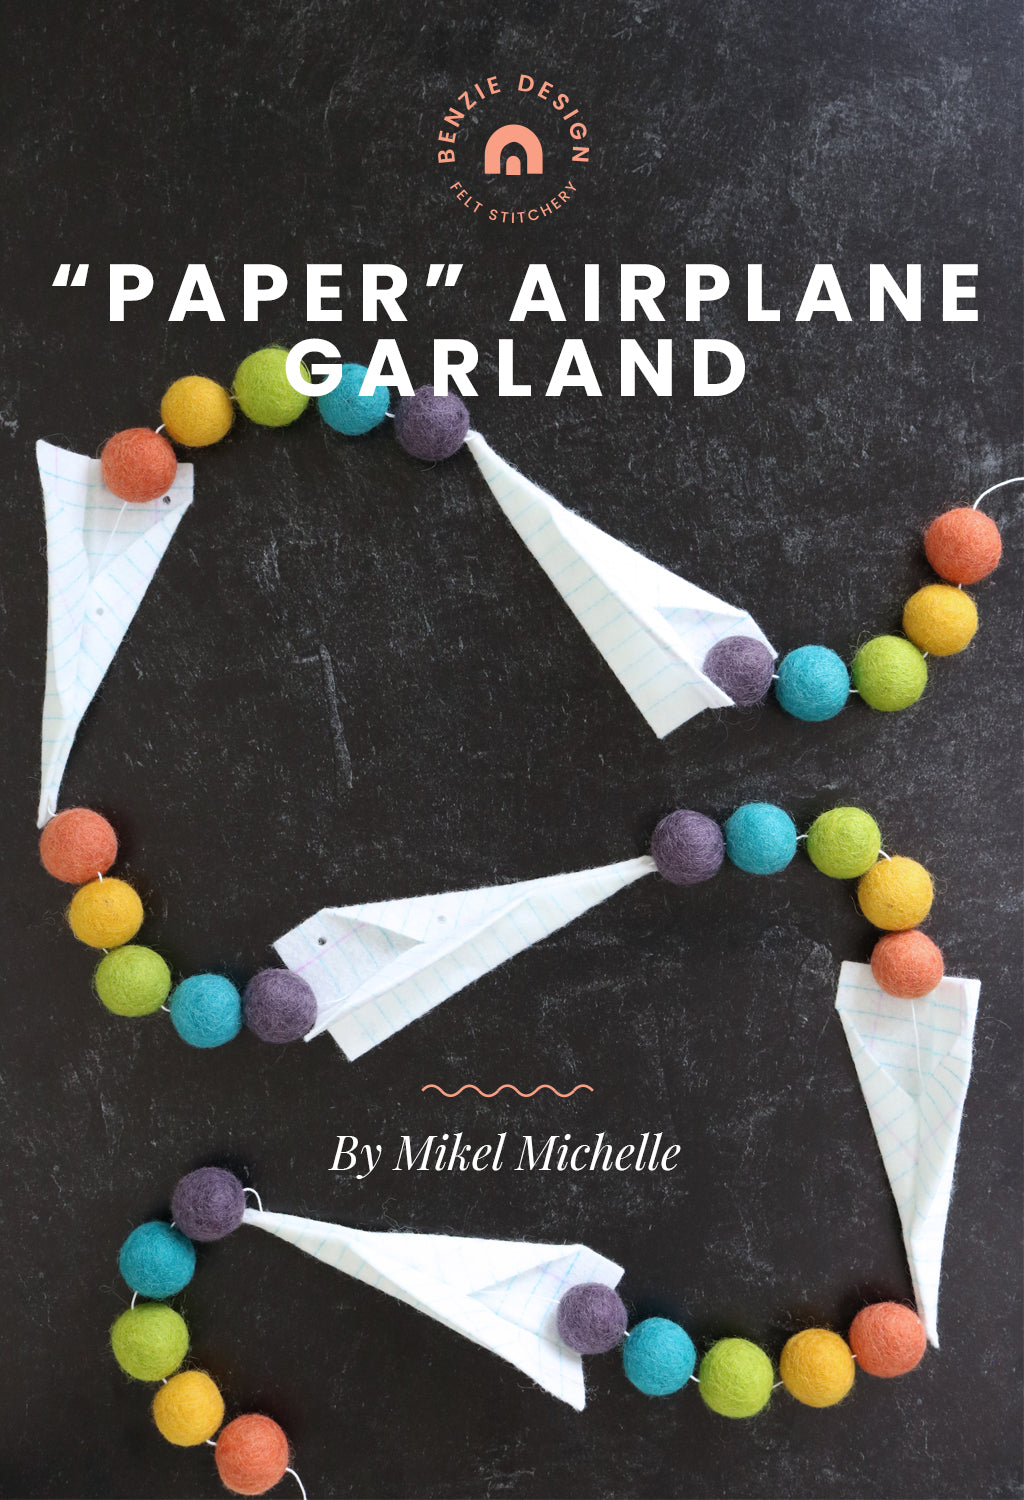 Paper airplane garland tutorial